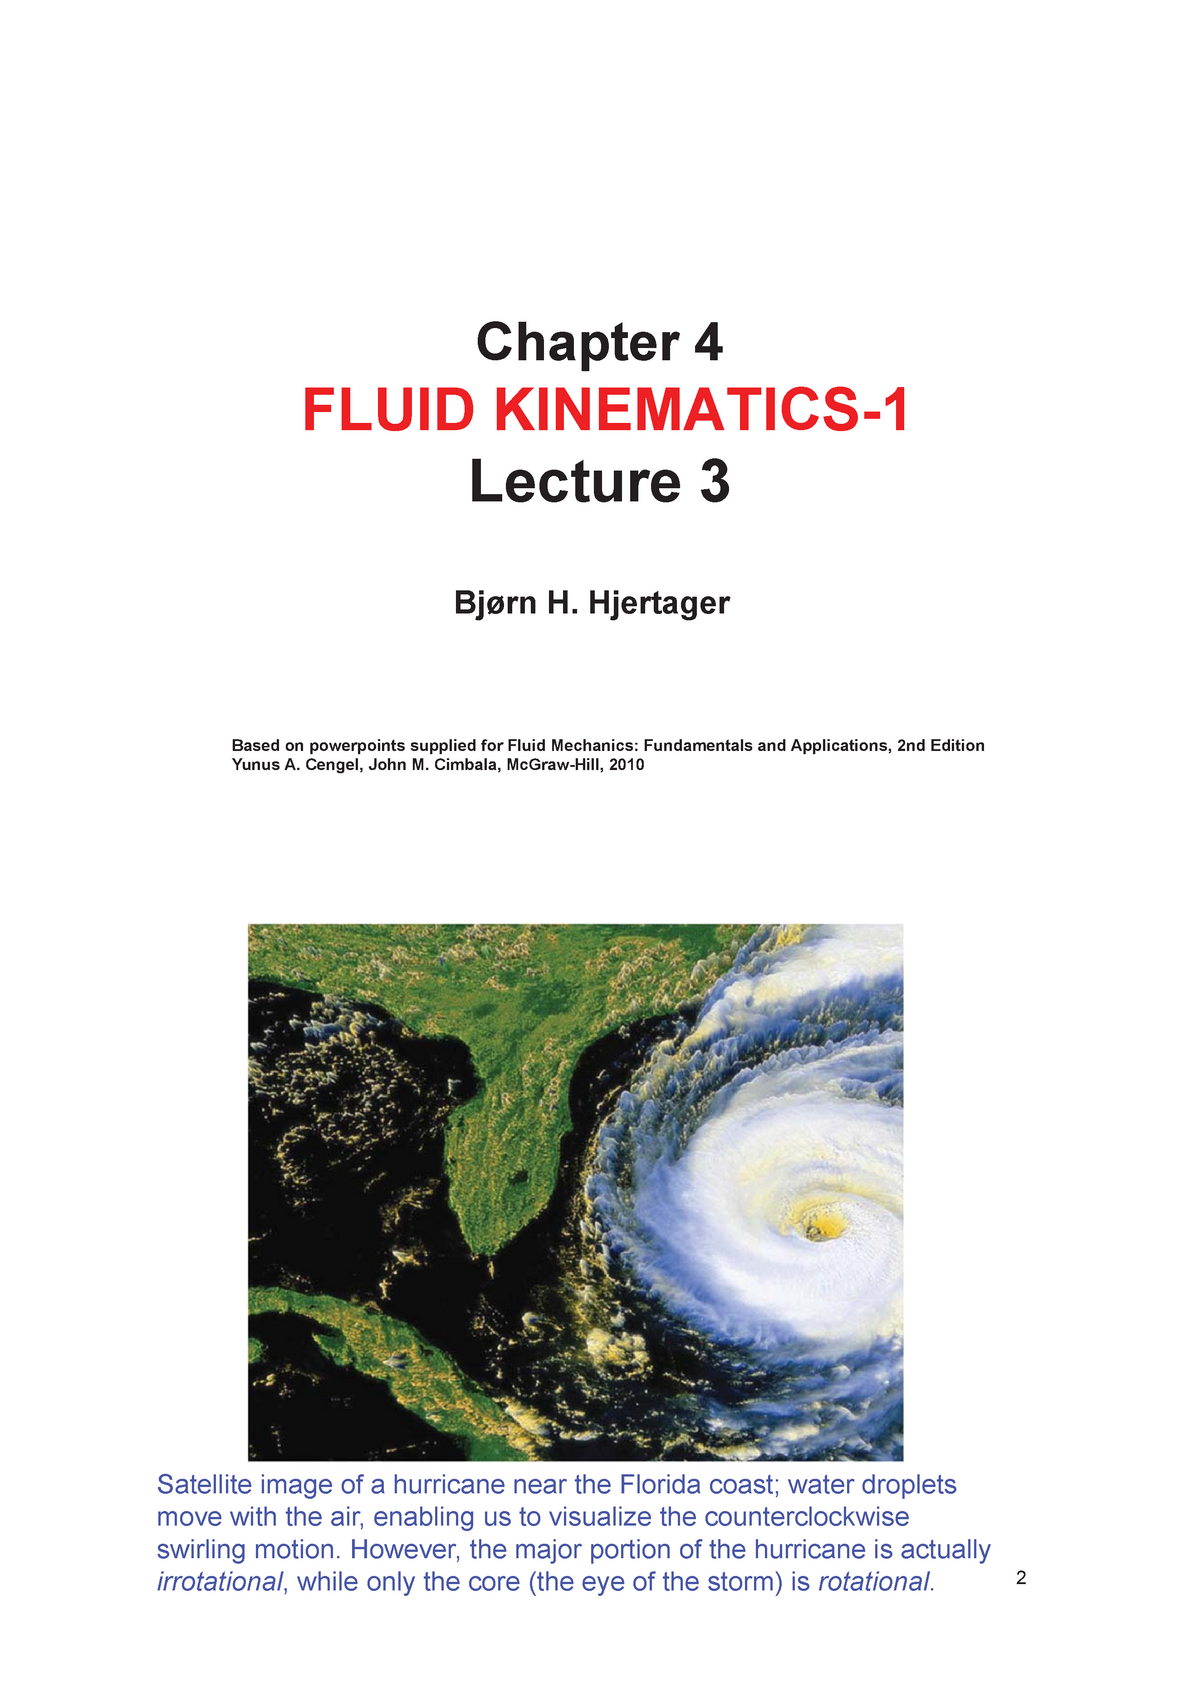 Chapter 04 2 lecture 3 1b 2p - Intro to fluid mechanics 113 - StuDocu